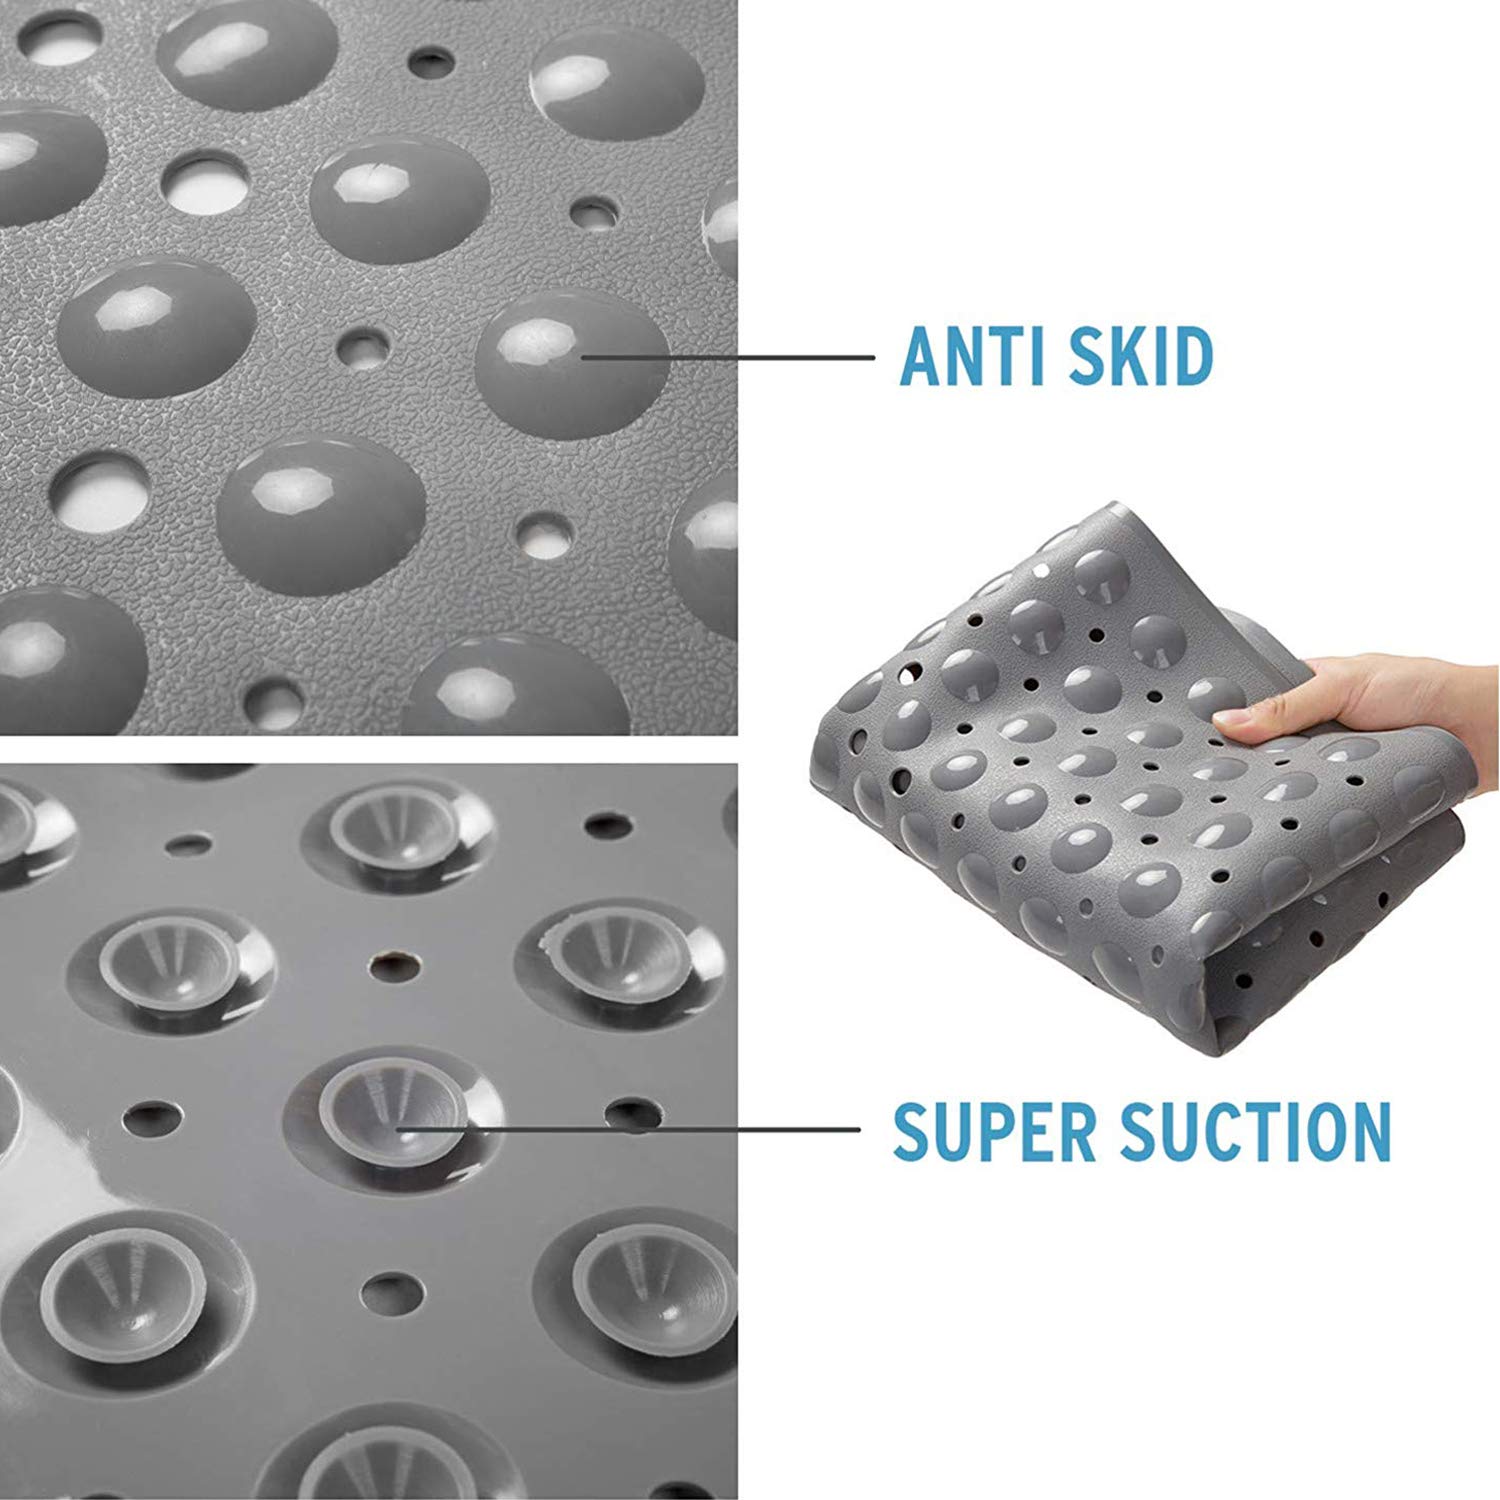 Experia Anti-Slip with Suction Cup Bath Mat, 80 x 80cm Grey (Soft-Pebble) LifeKrafts